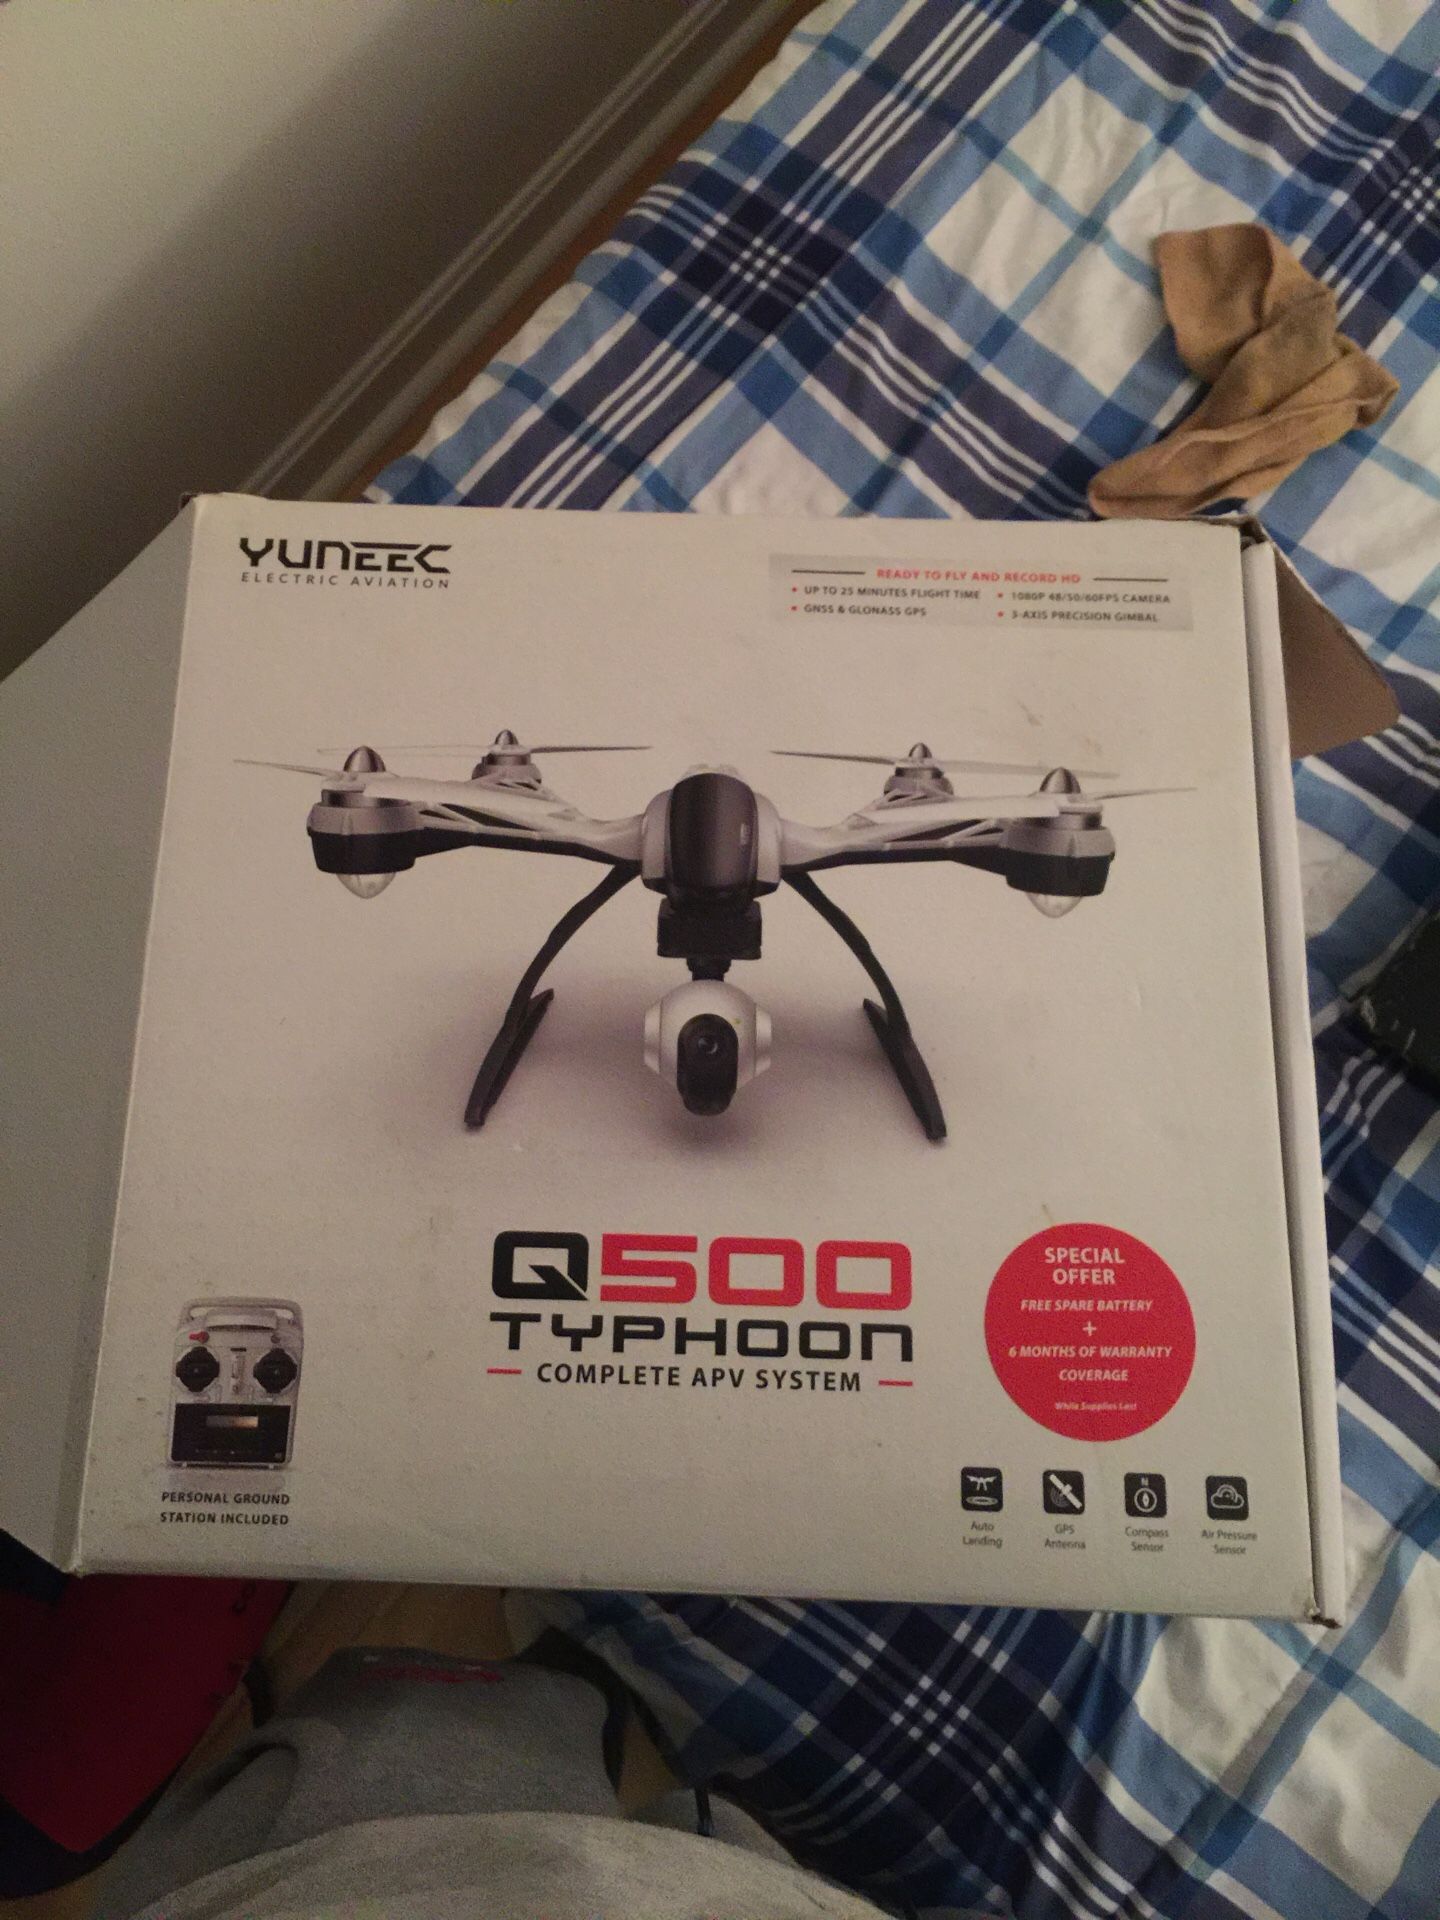 Yuneec Q500 Typhoon drone